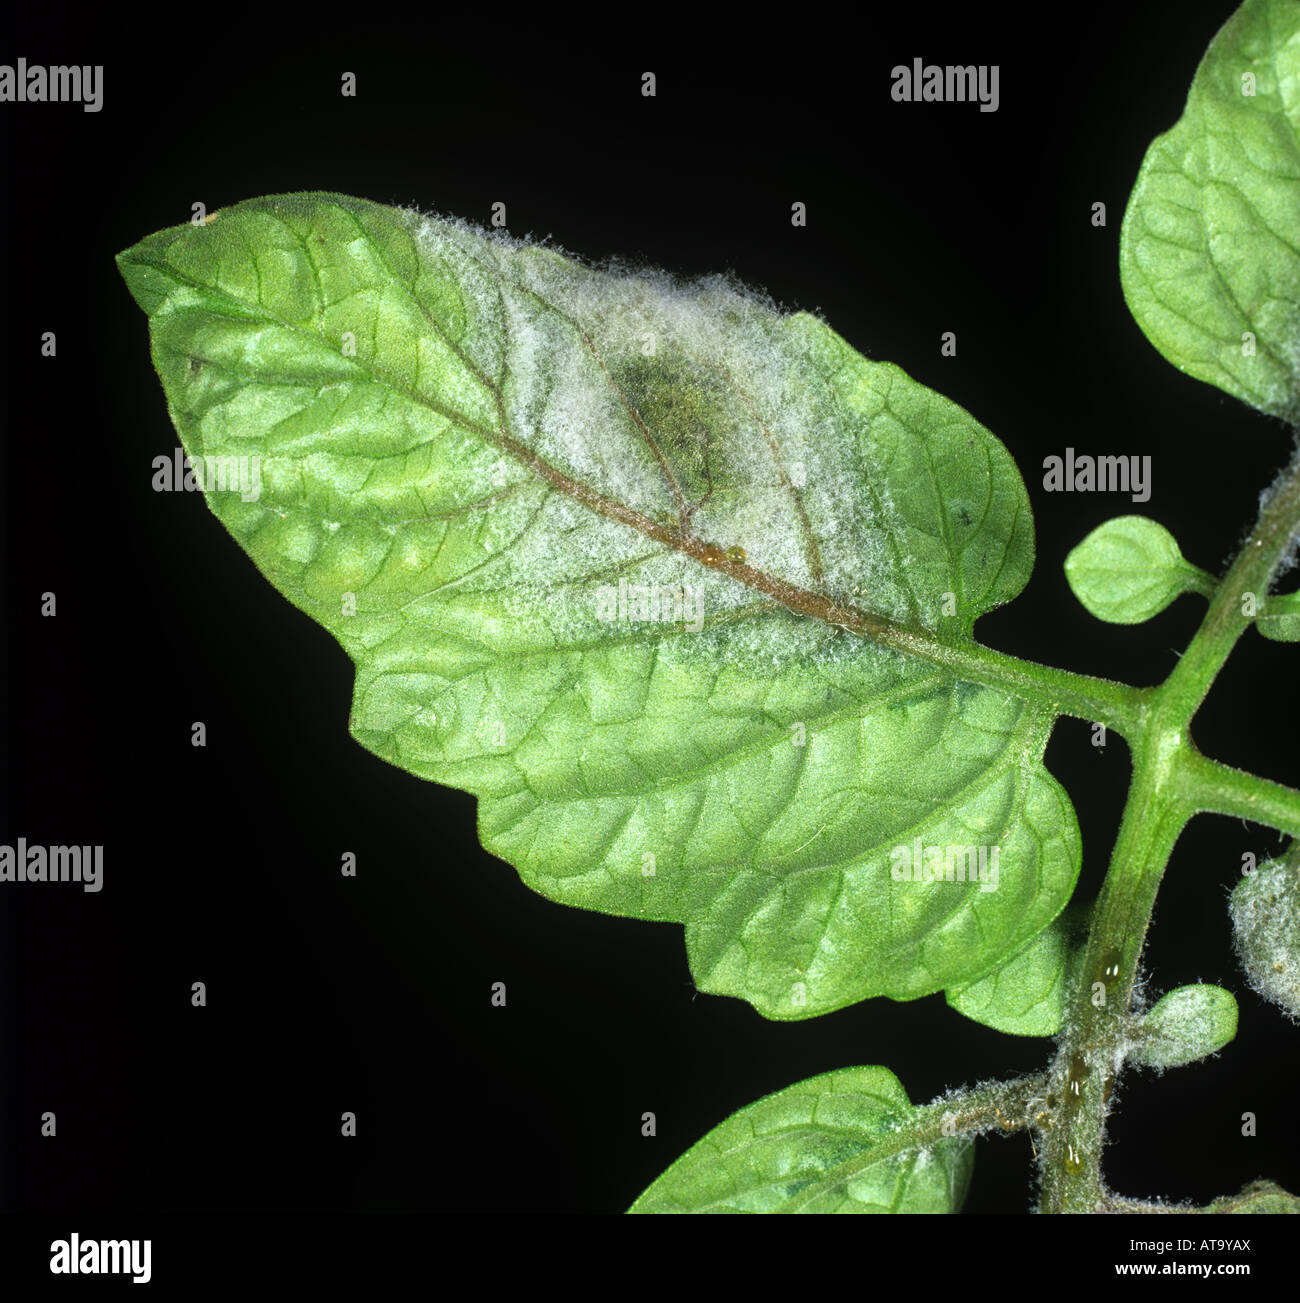 Tomato late blight Phytophthora infestans necrosis sporulation on a tomato leaf underside Stock Photo